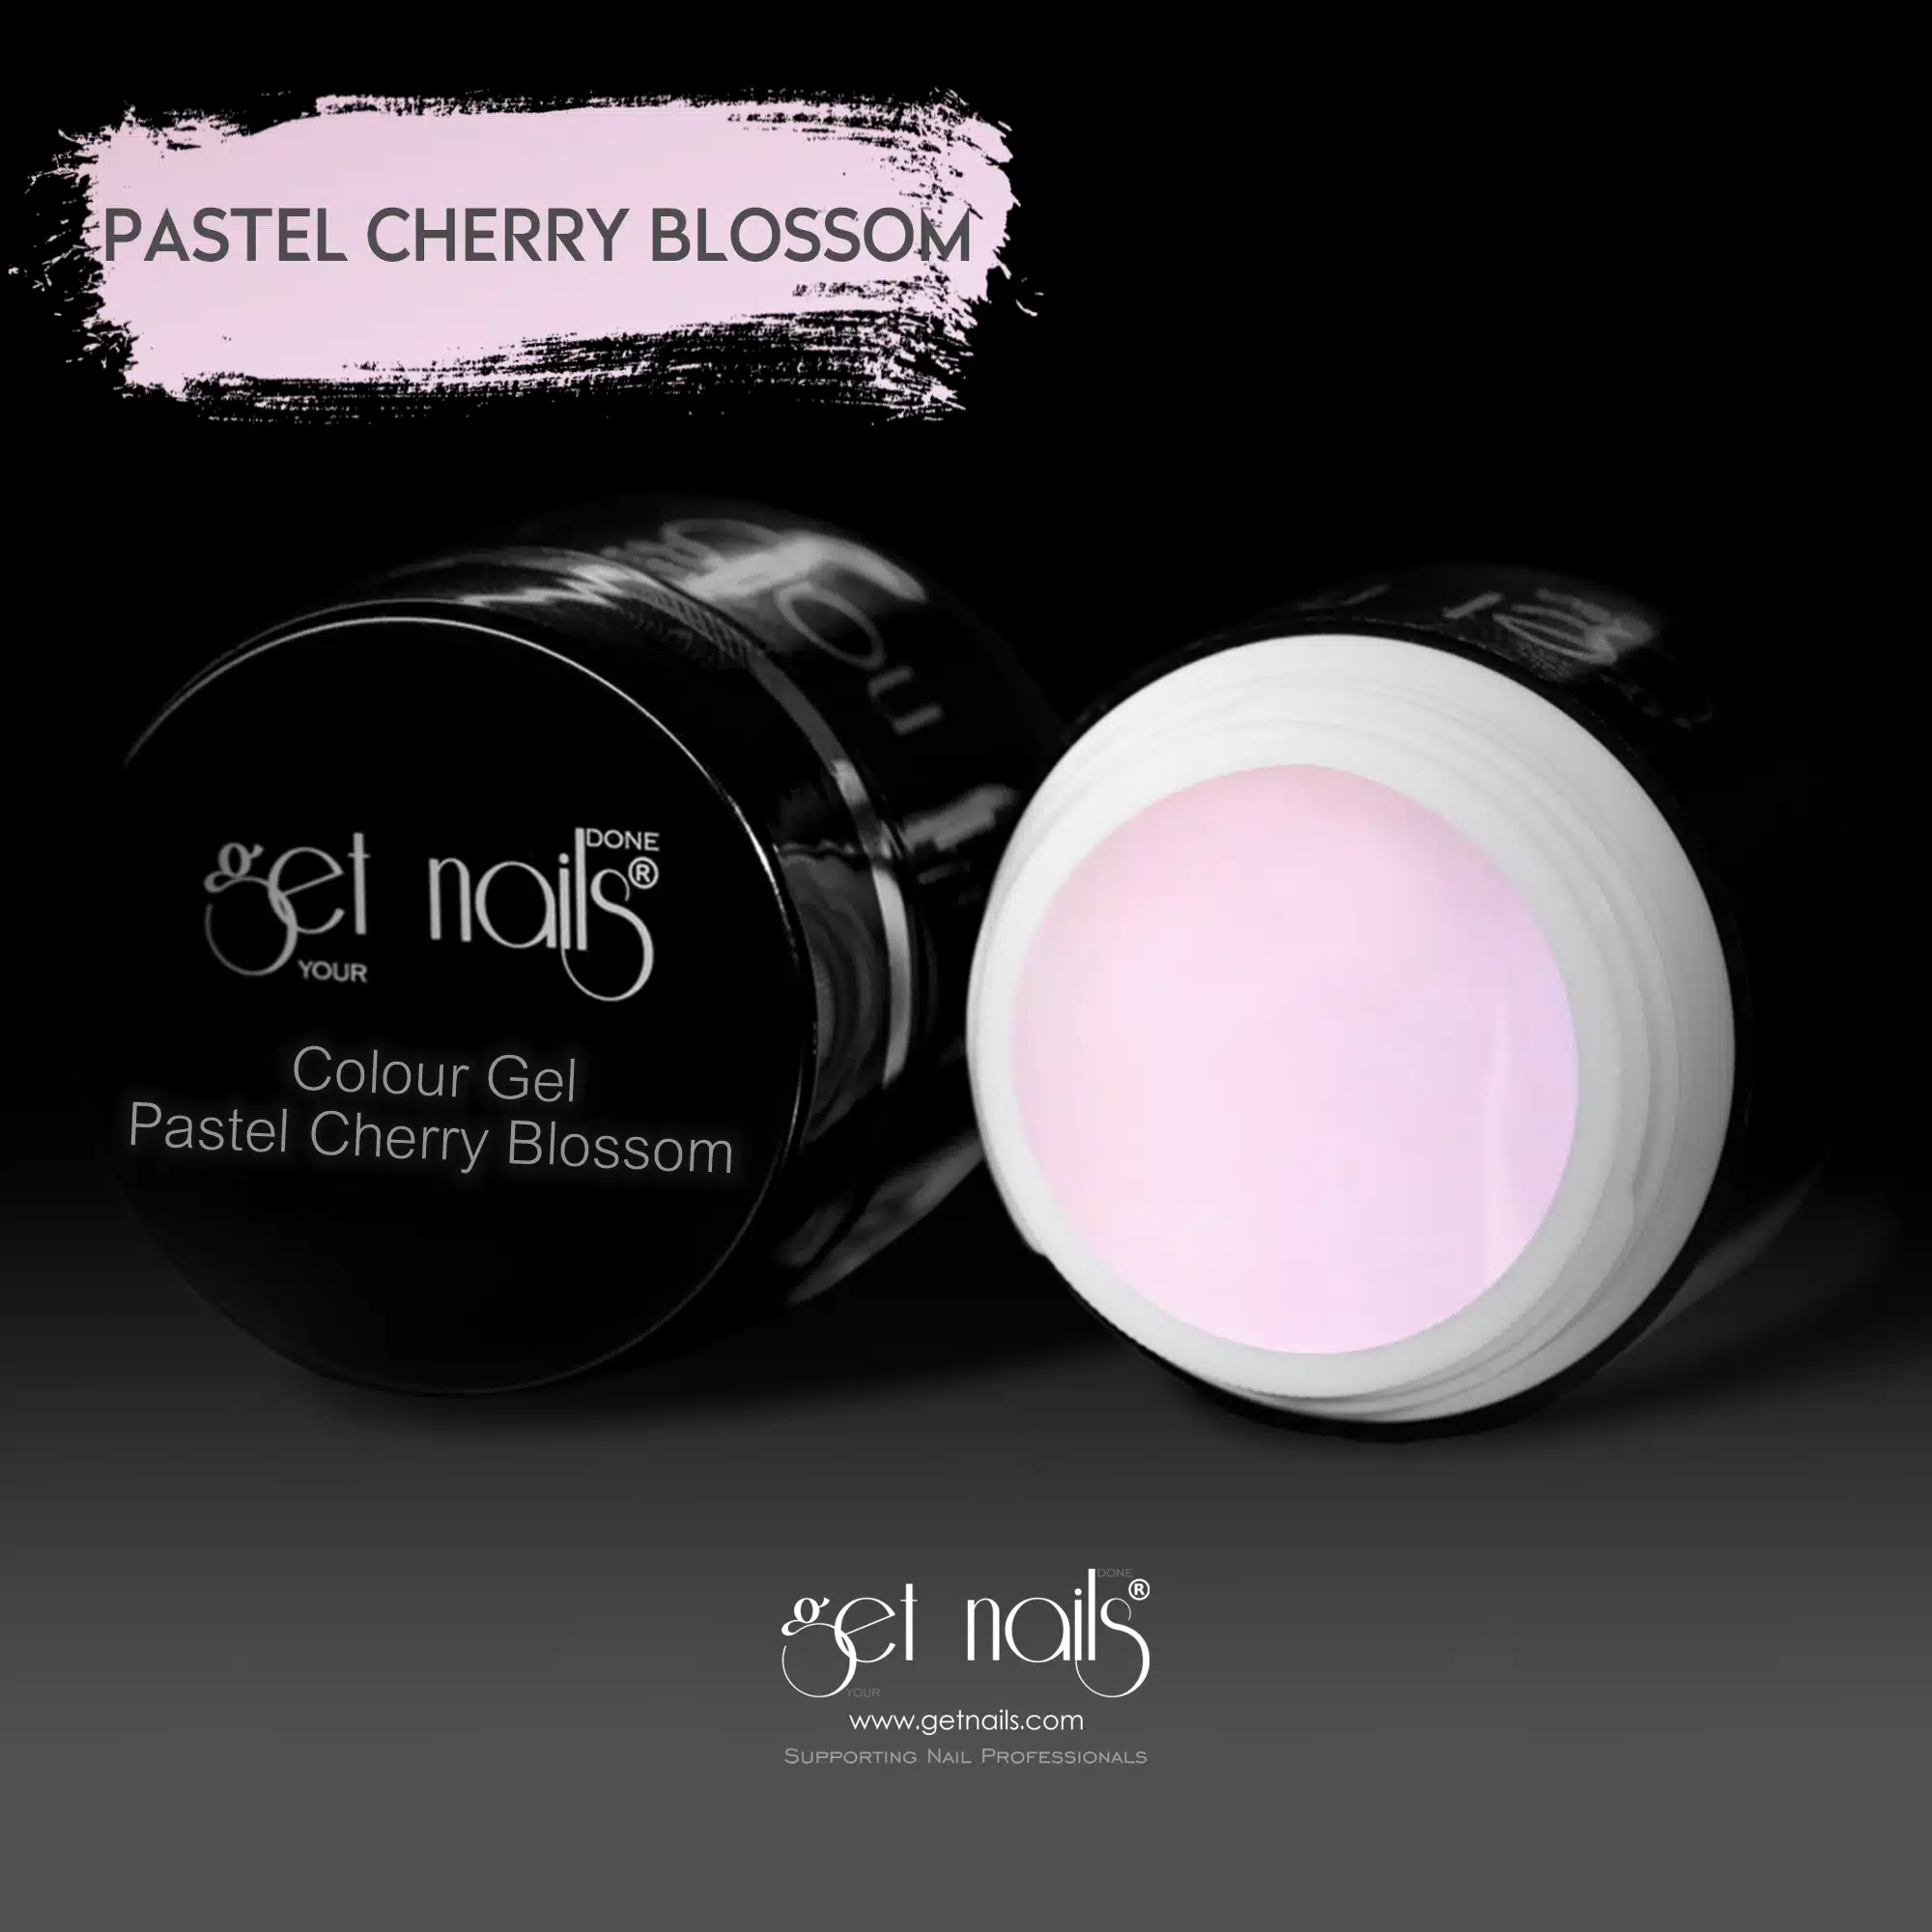 Get Nails Austria - Colour Gel Pastel Cherry Blossom 5g